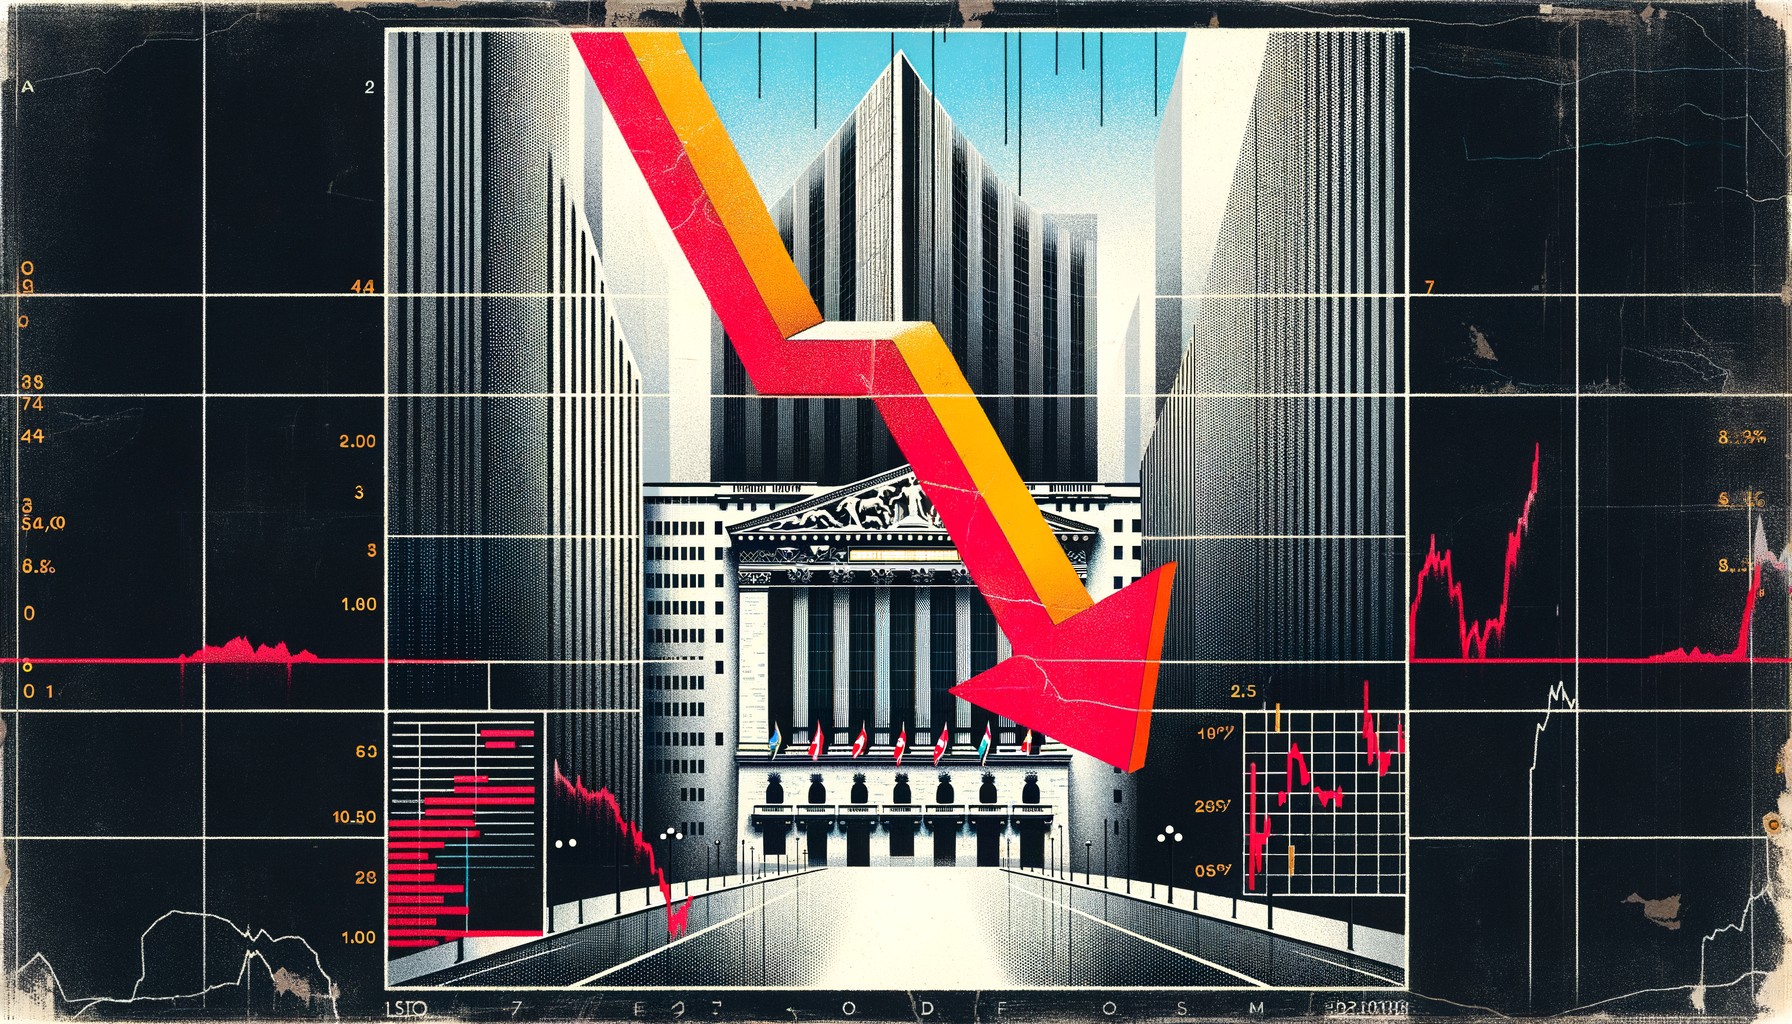 Toronto Stock Exchange Falls as Bond Yields Rise